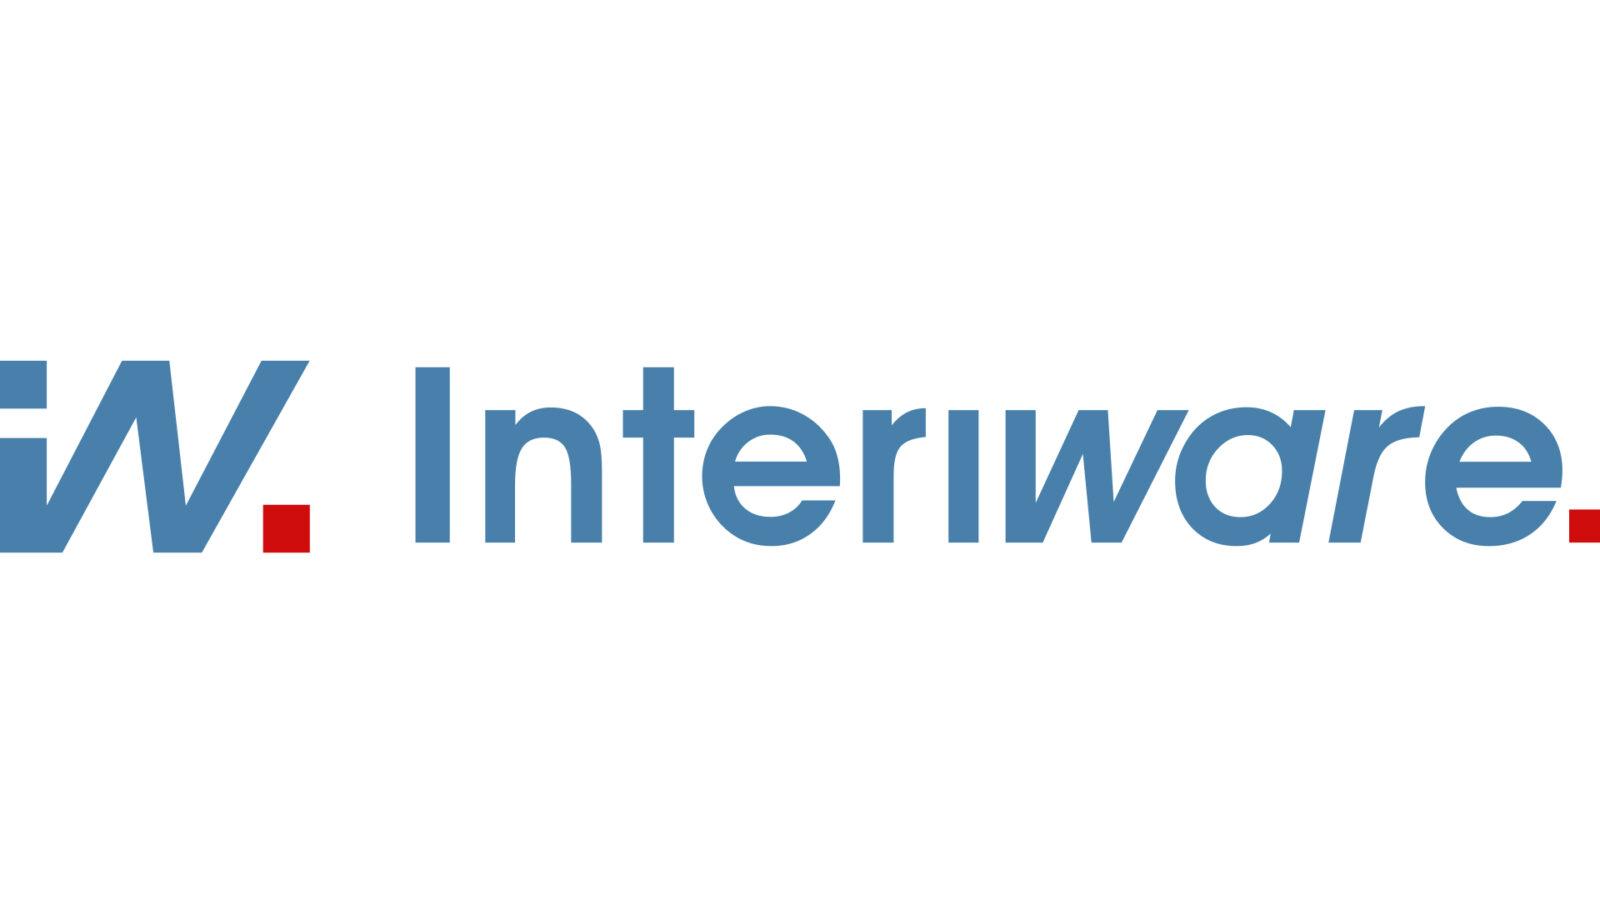 Interiware HR Solutions
Logiciel SAM / Interijob / Interitrack